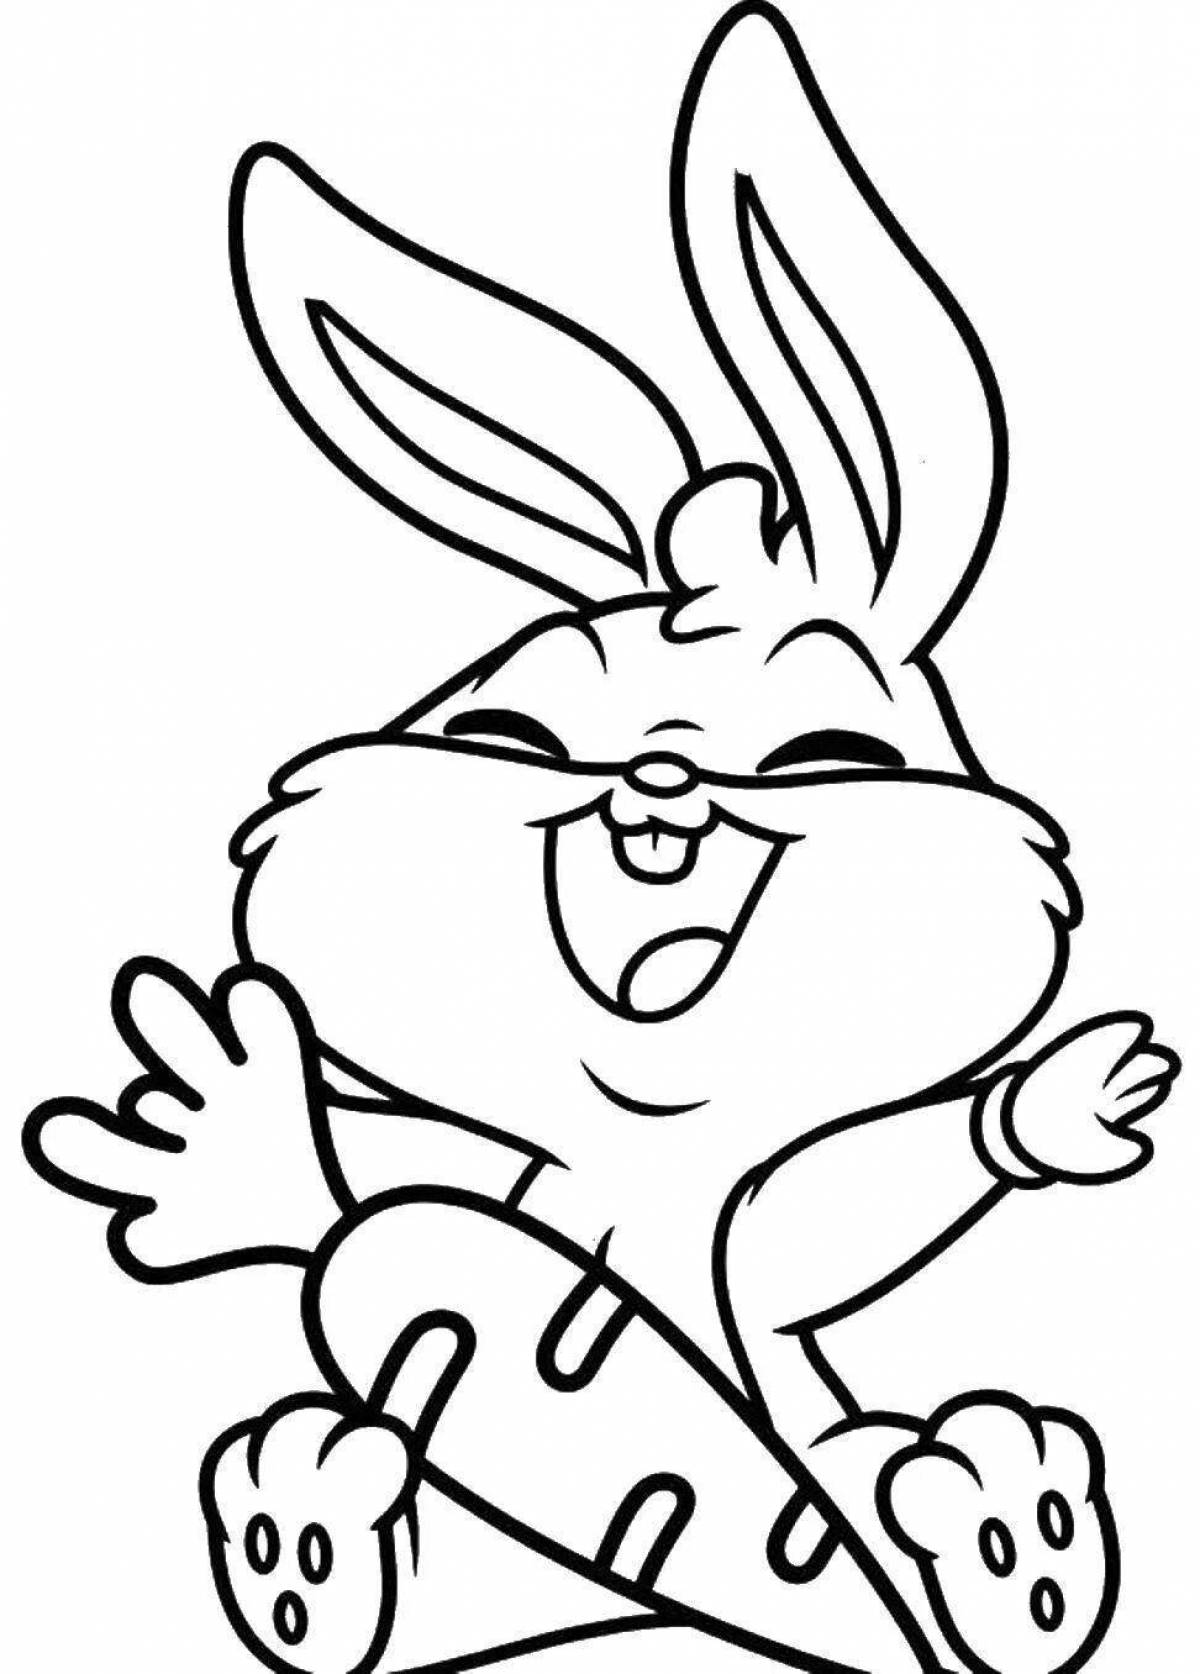 Attractive cartoon hare coloring book